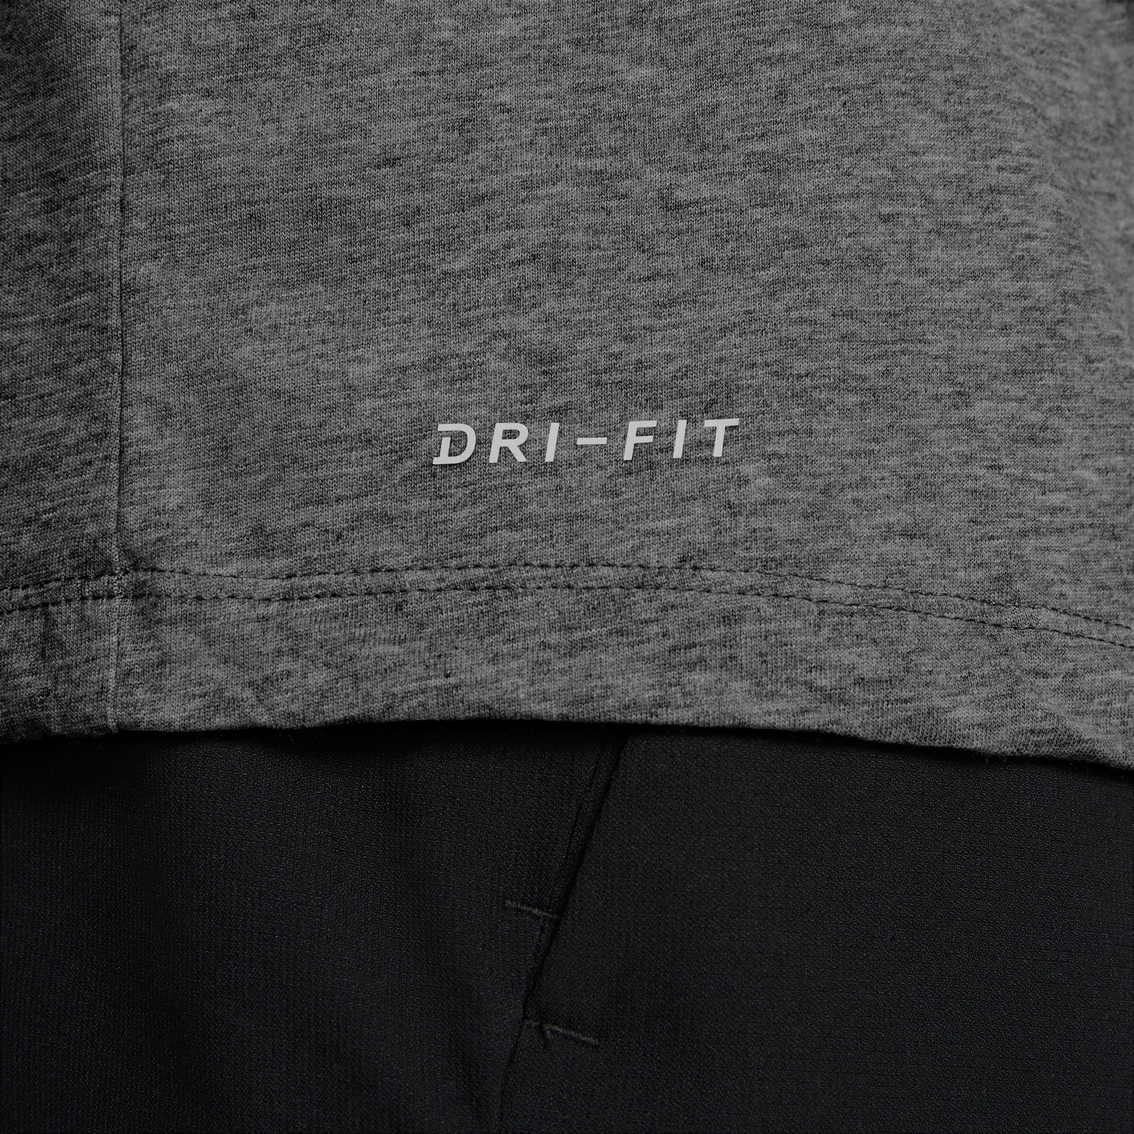 Nike Dri Fit Cotton Crew Tee - Image 4 of 7